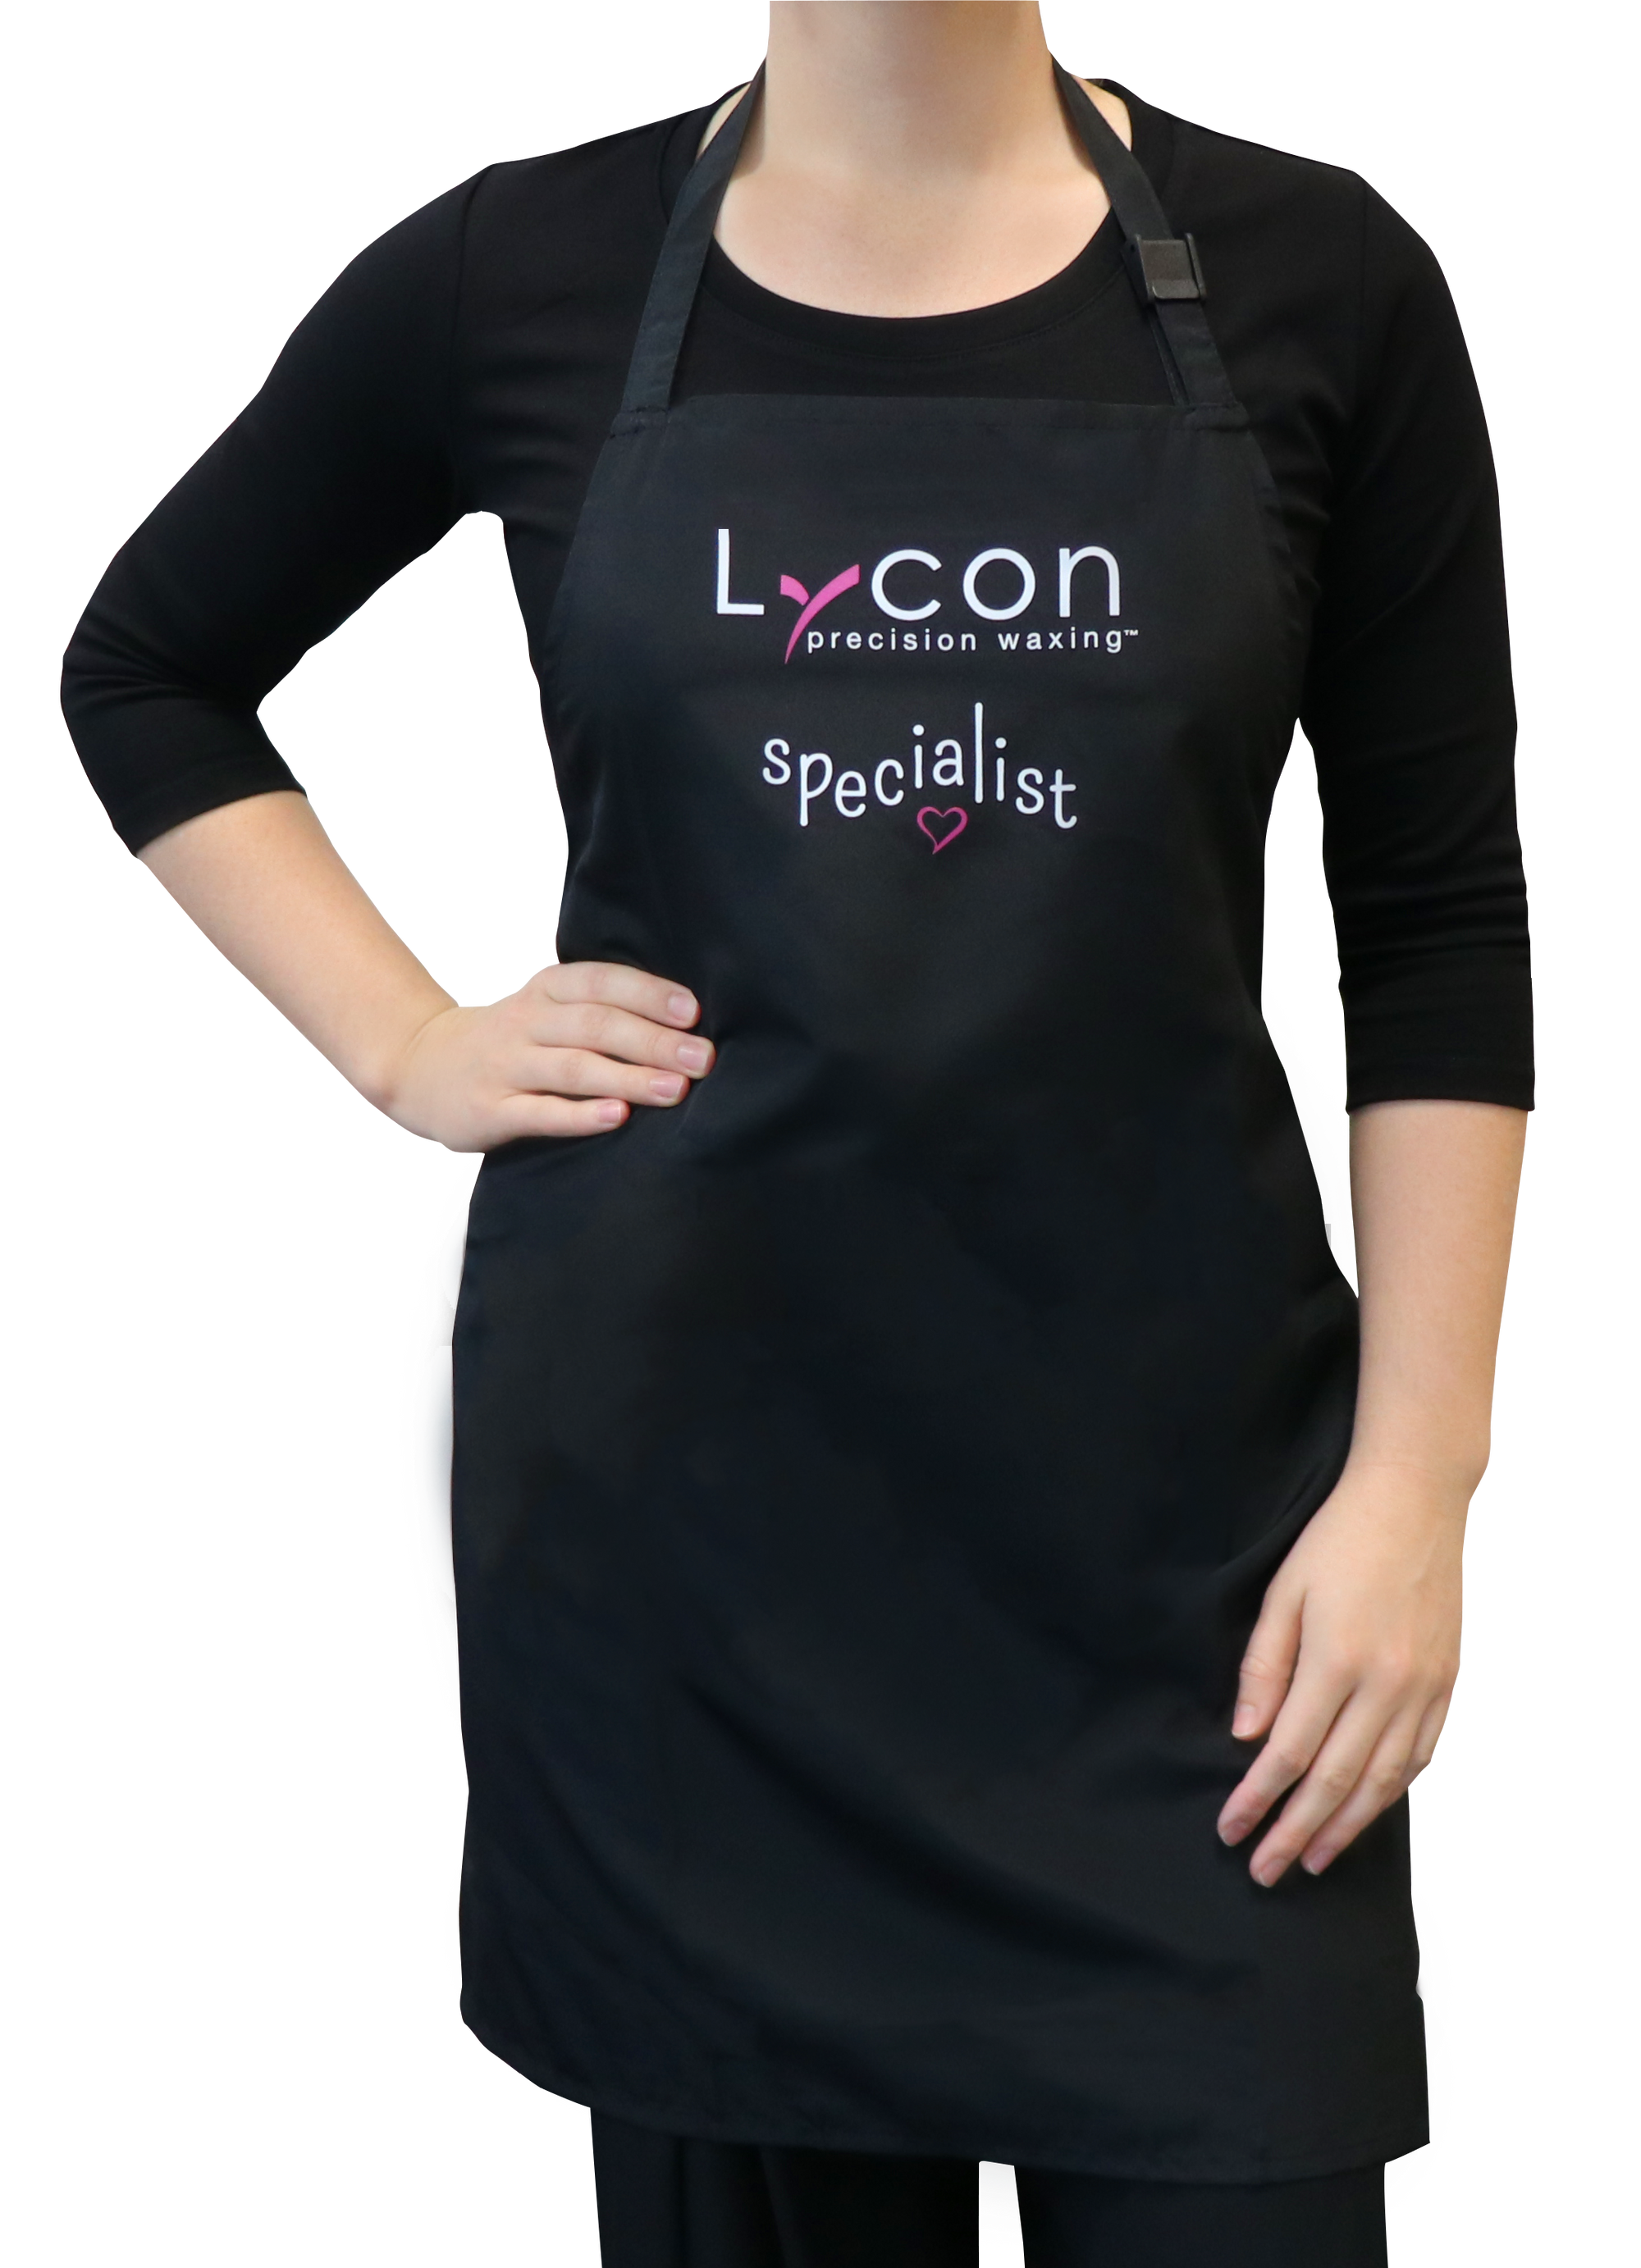 Lycon Specialist Apron